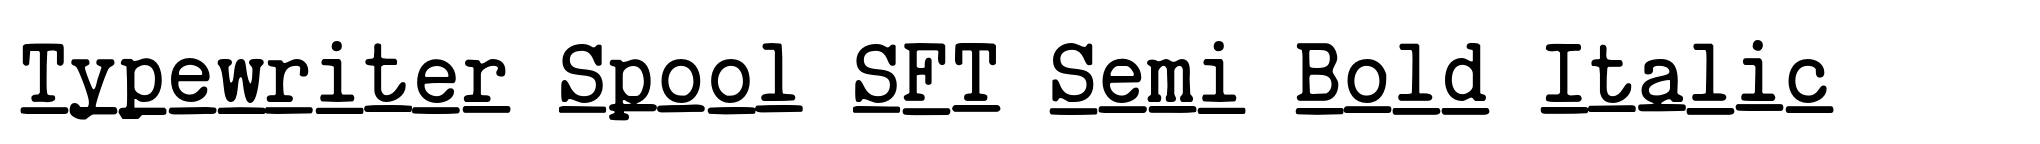 Typewriter Spool SFT Semi Bold Italic image